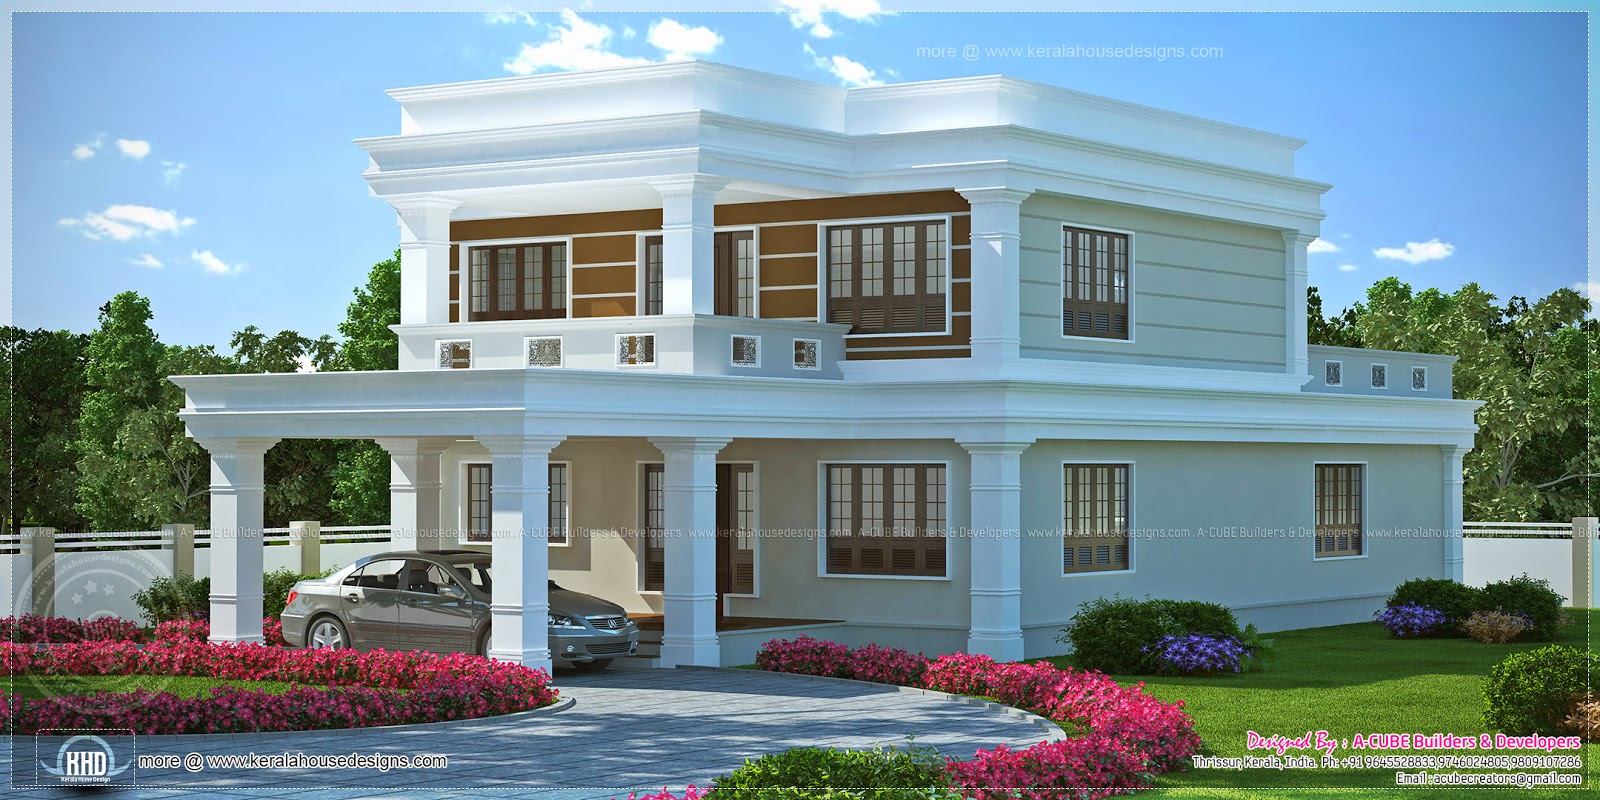  Flat  roof  4  bedroom  luxury home  Home  Kerala Plans 